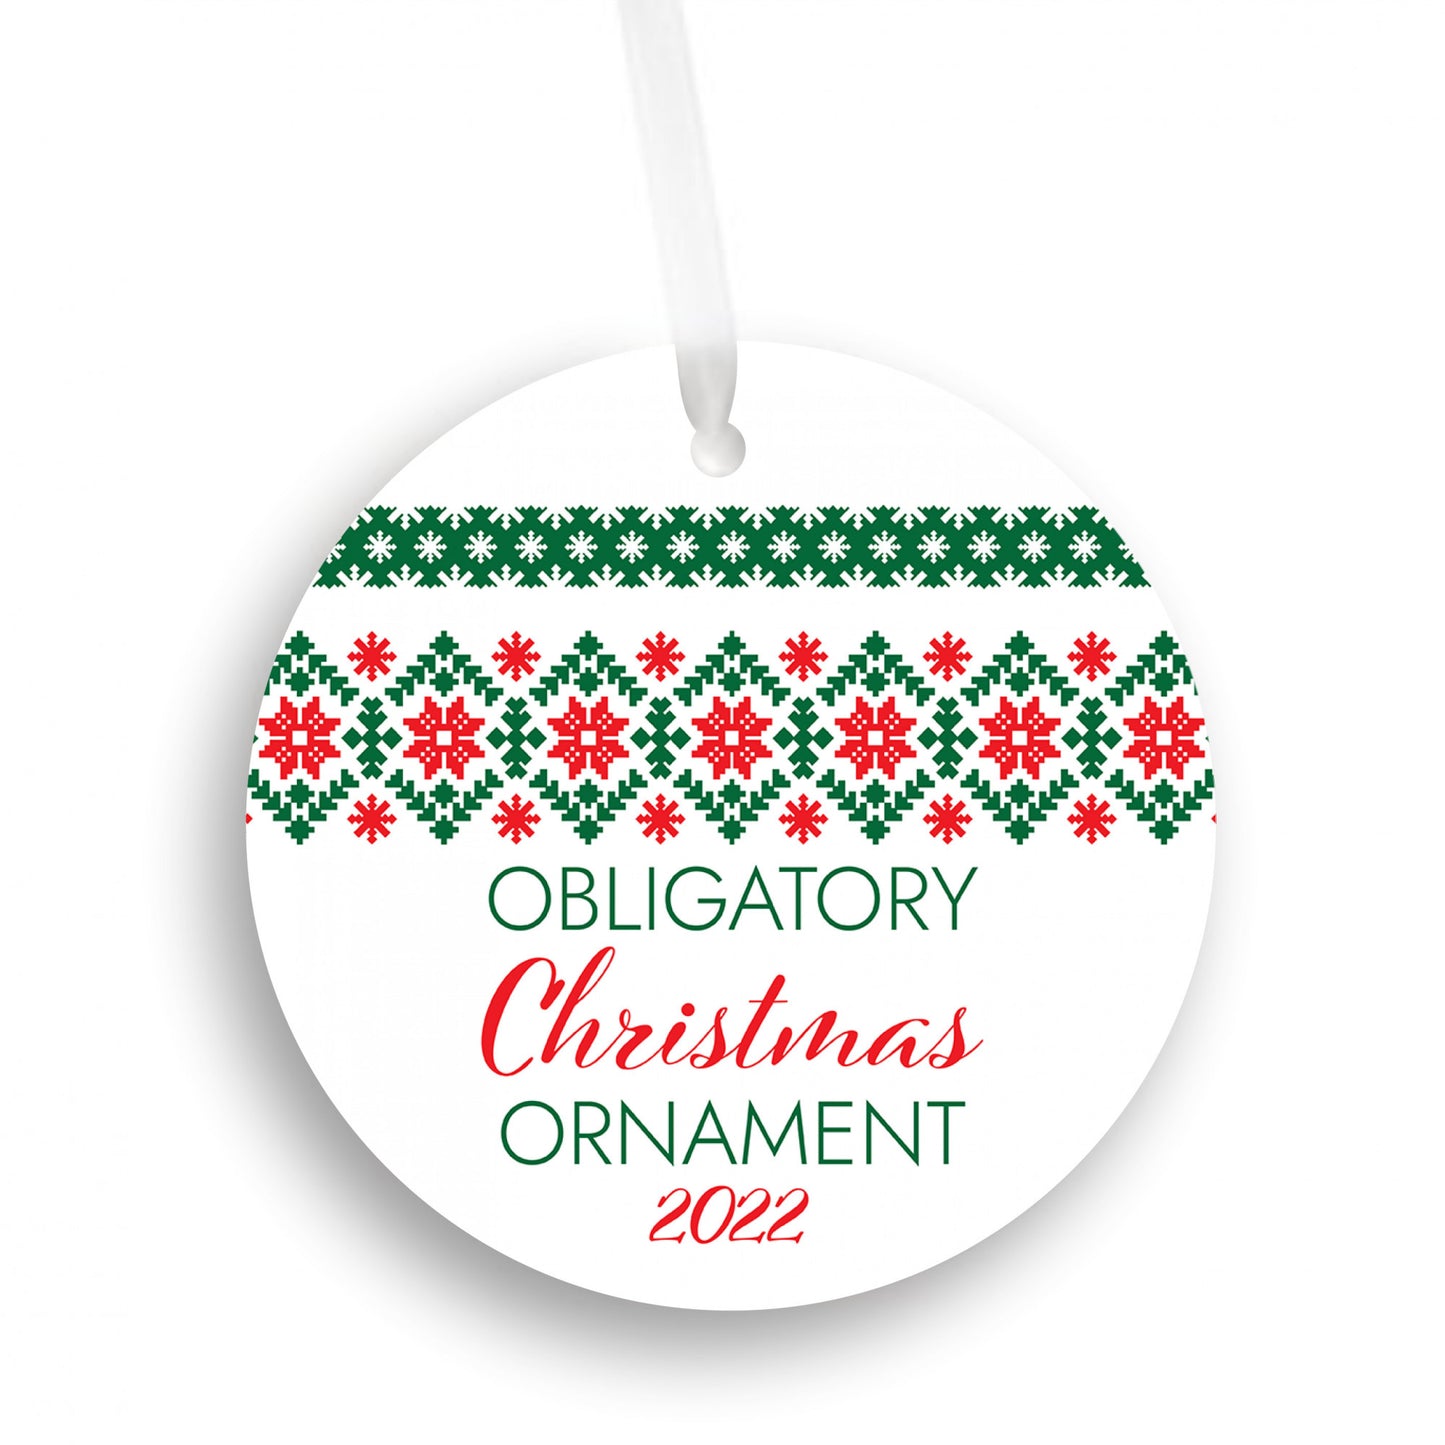 Obligatory Christmas Ornament 2022